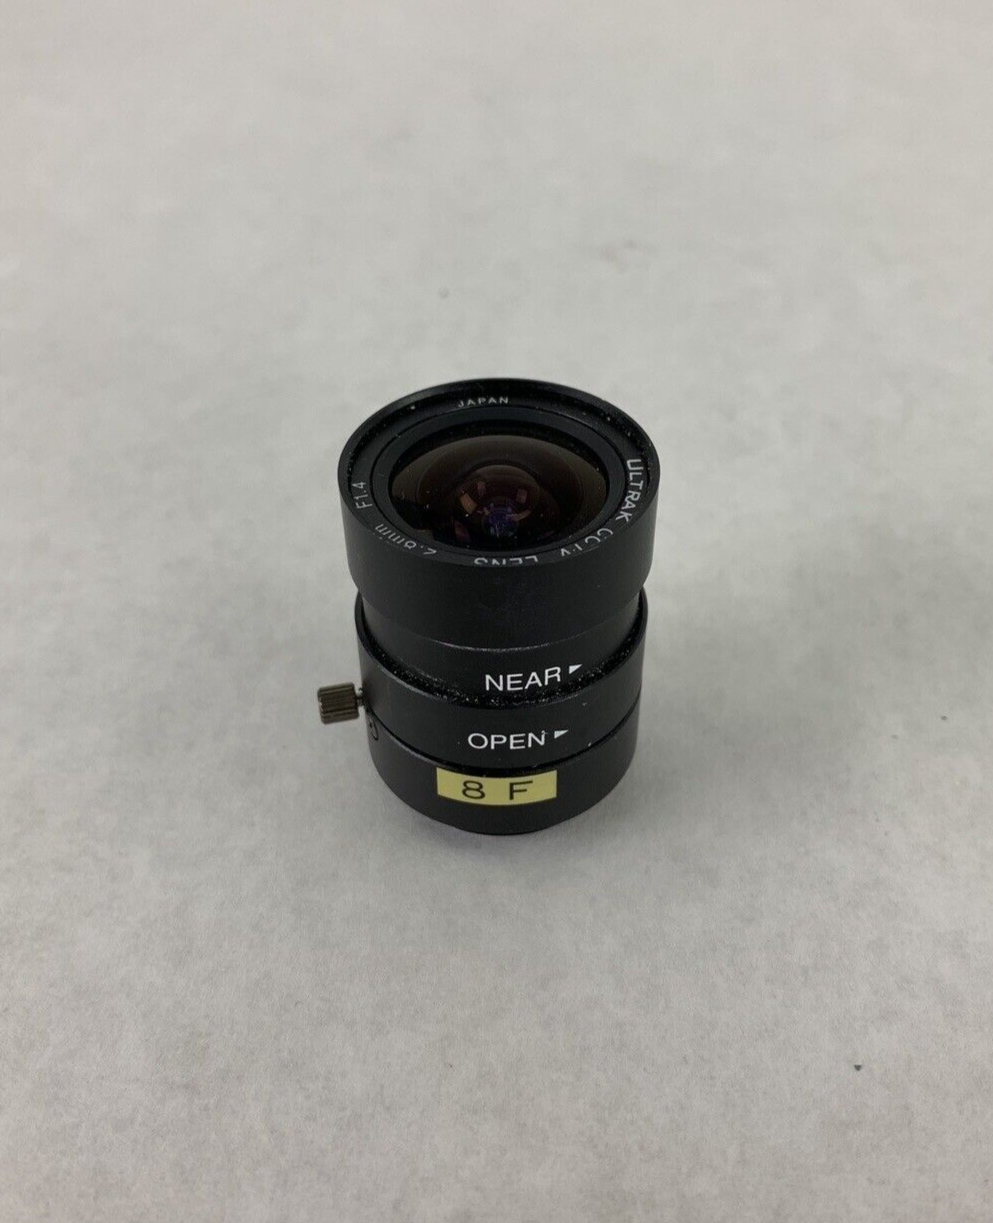 UltraK 2.8mm F1.4 1/3" CCTV Lens from Ultrak KC4300